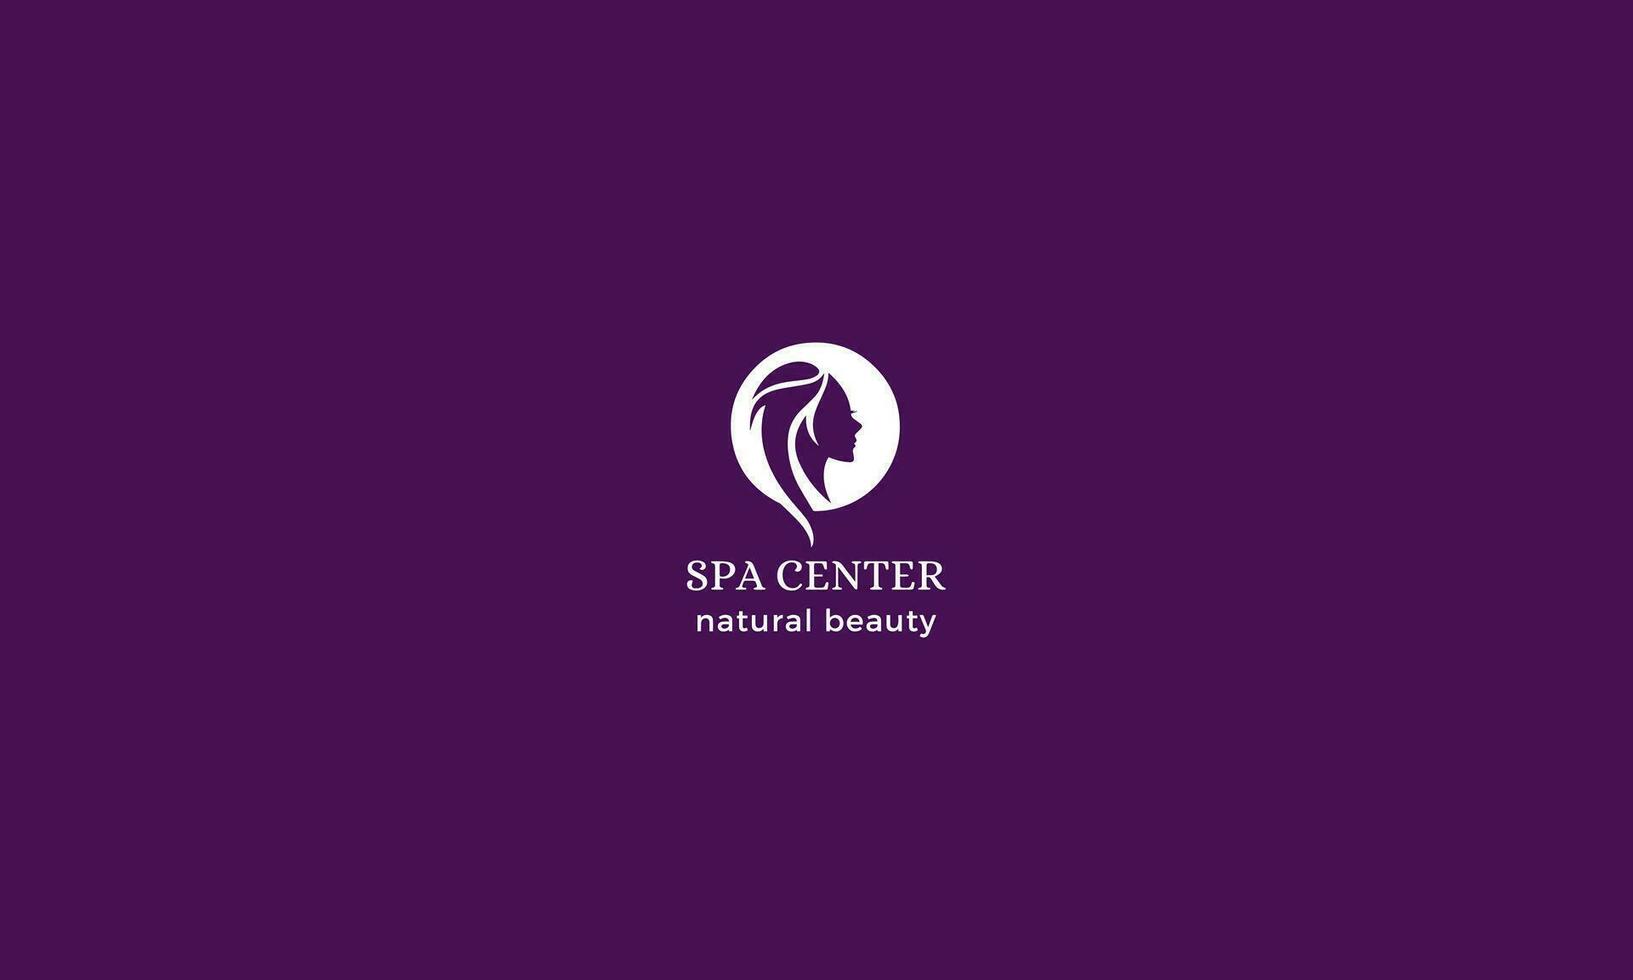 Beauty salon logo with creative concept and unique element design vector